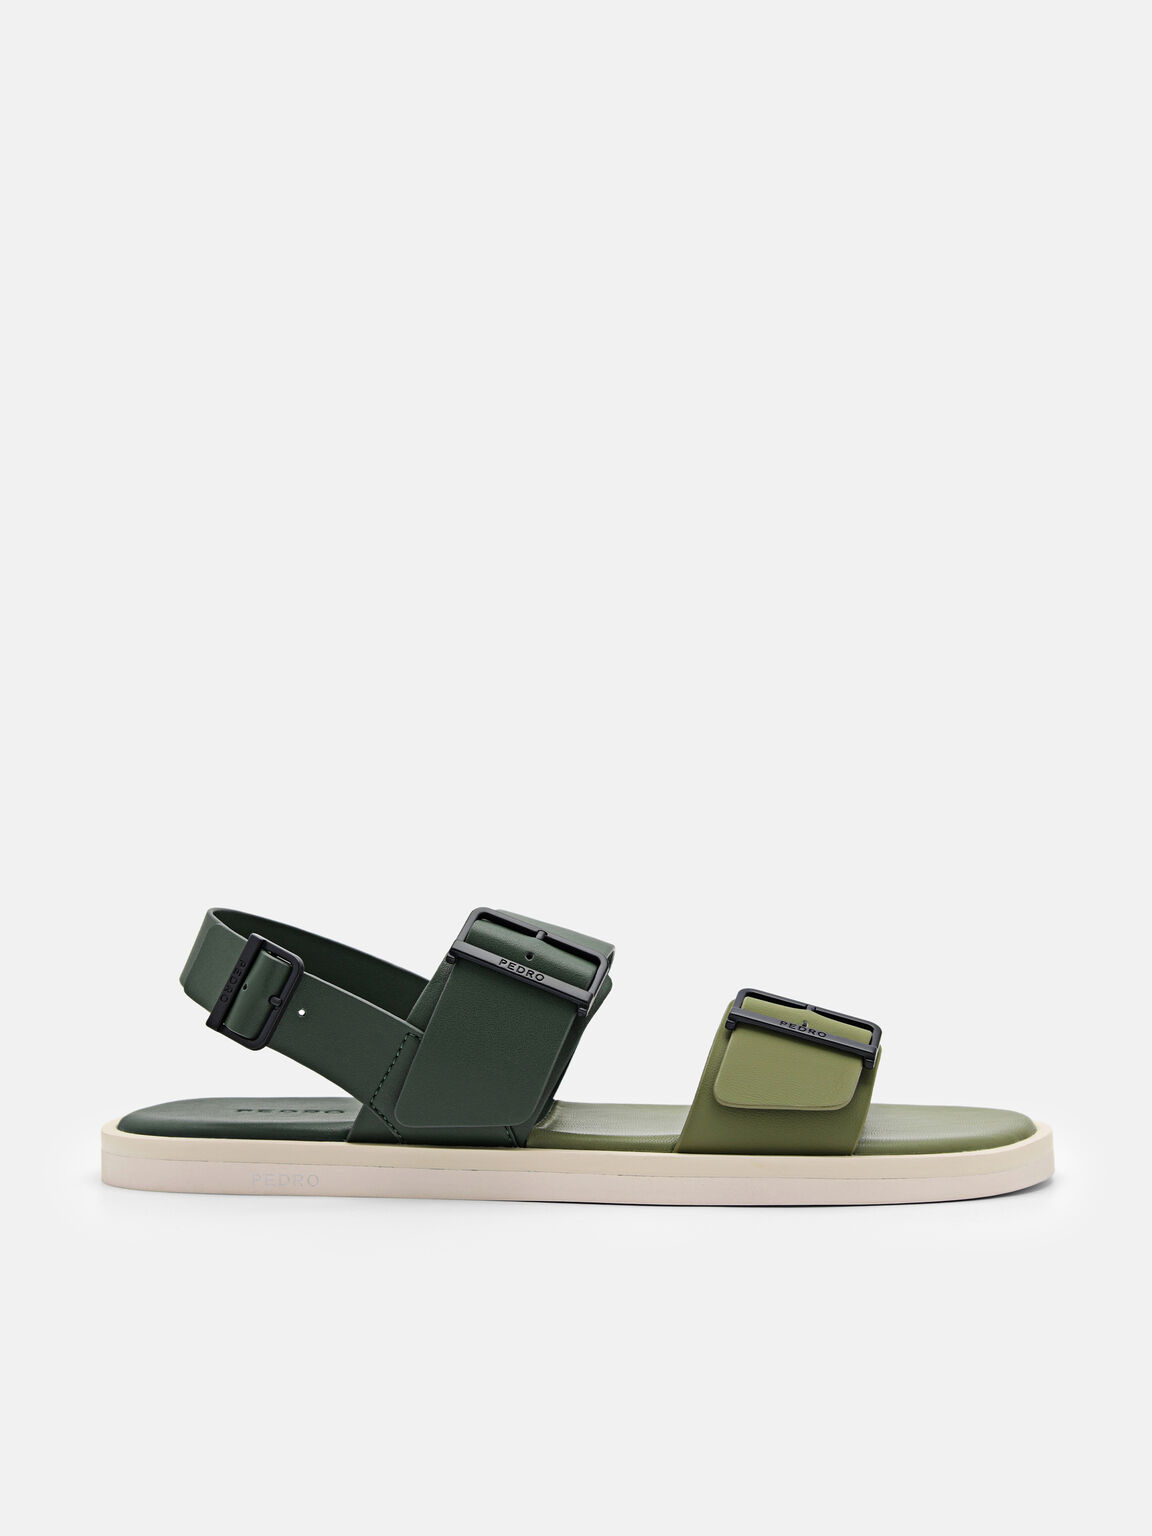 Ripley Backstrap Sandals, Dark Green